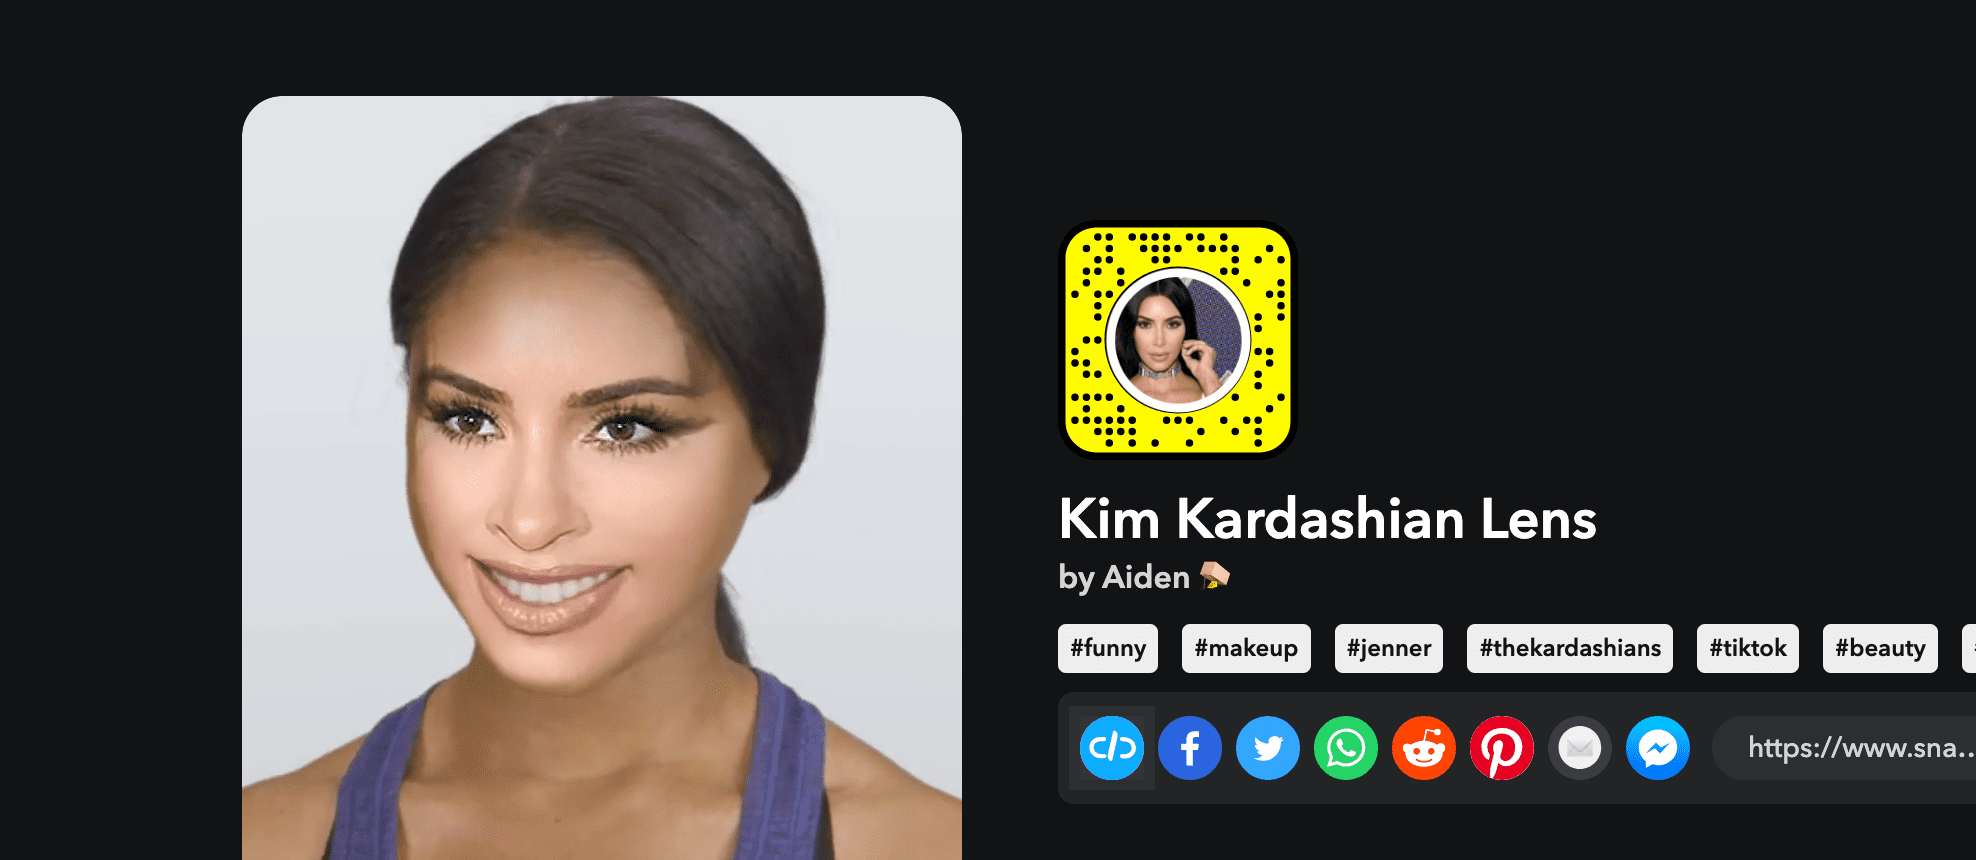 Kim Kardashian Lens by aiden